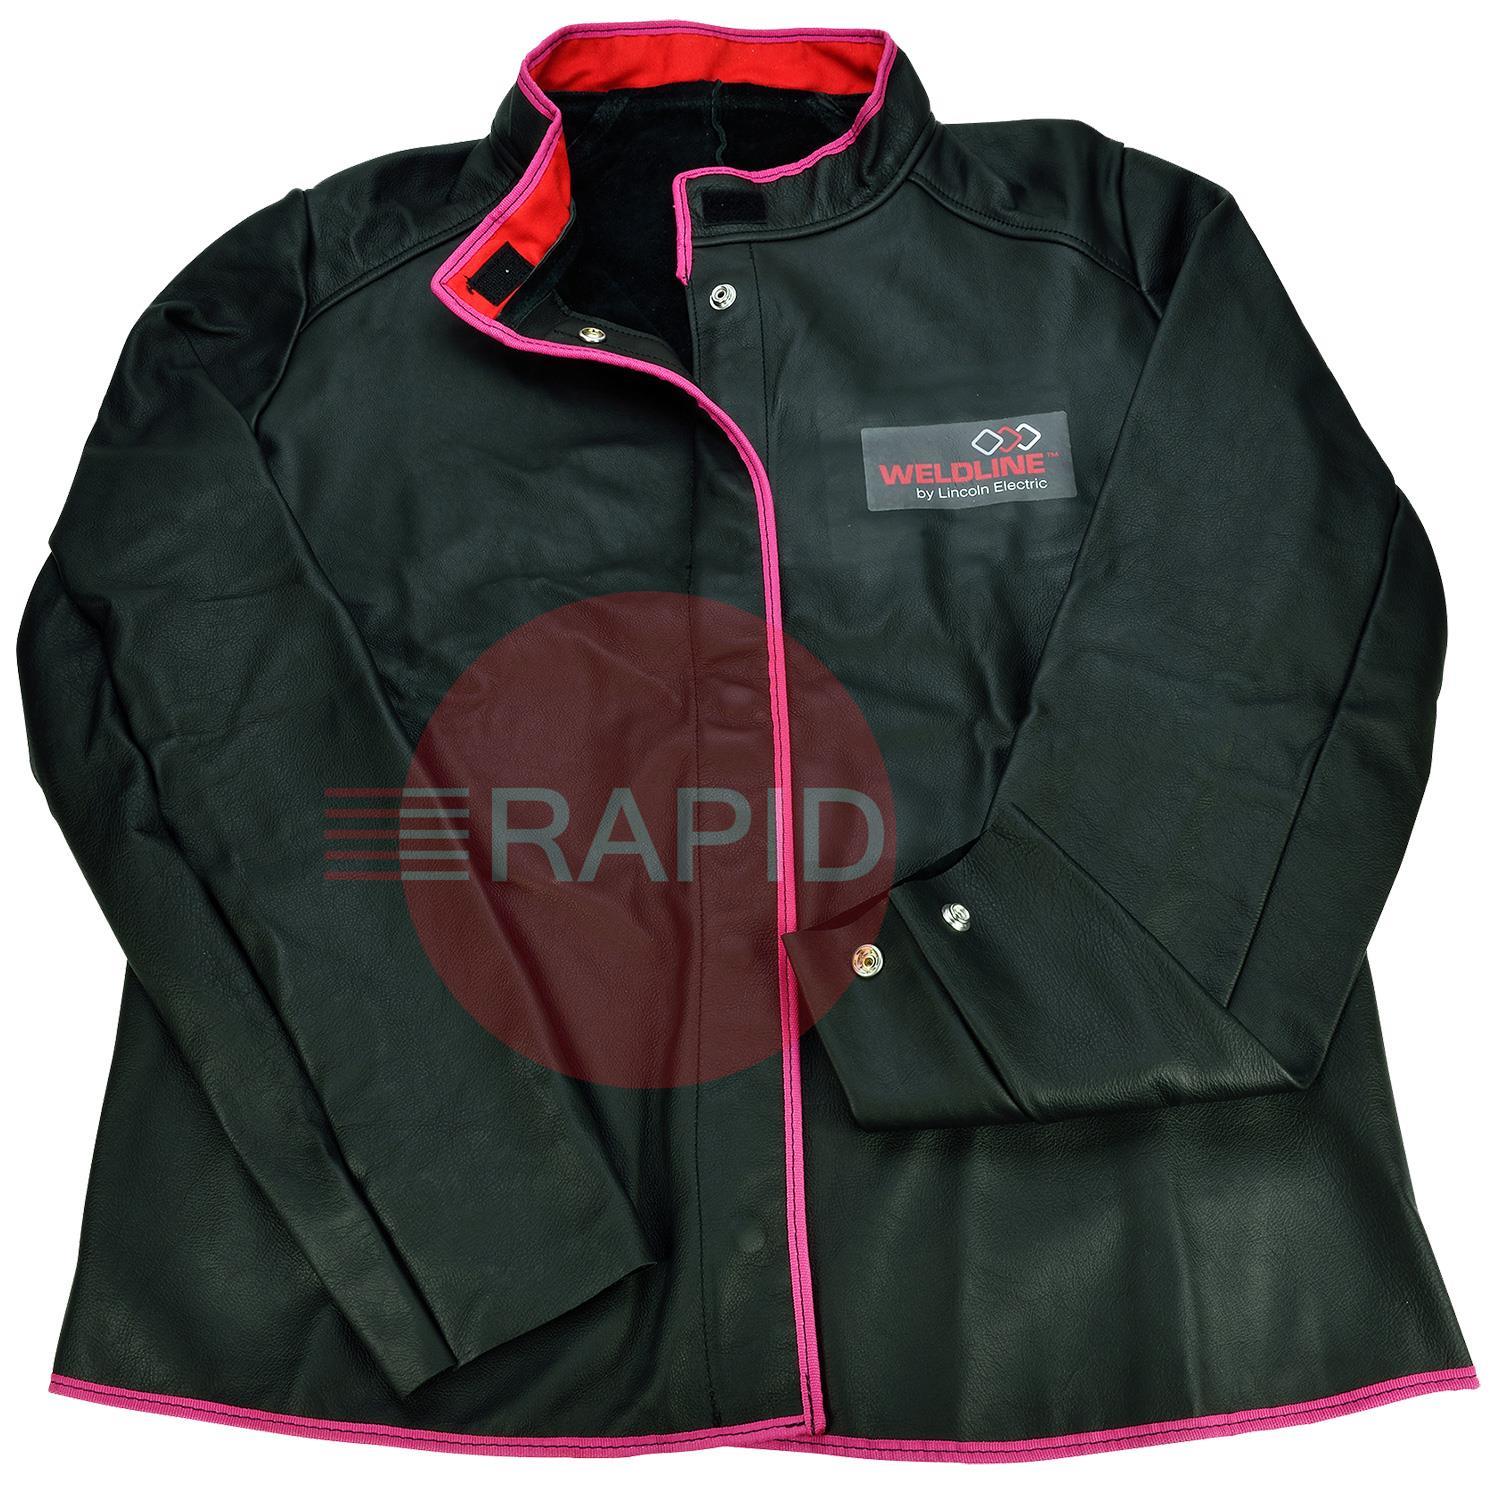 WJL-XL-2019  Weldline Female Grain Leather Welding Jacket with Split Leather Bag - X-Large